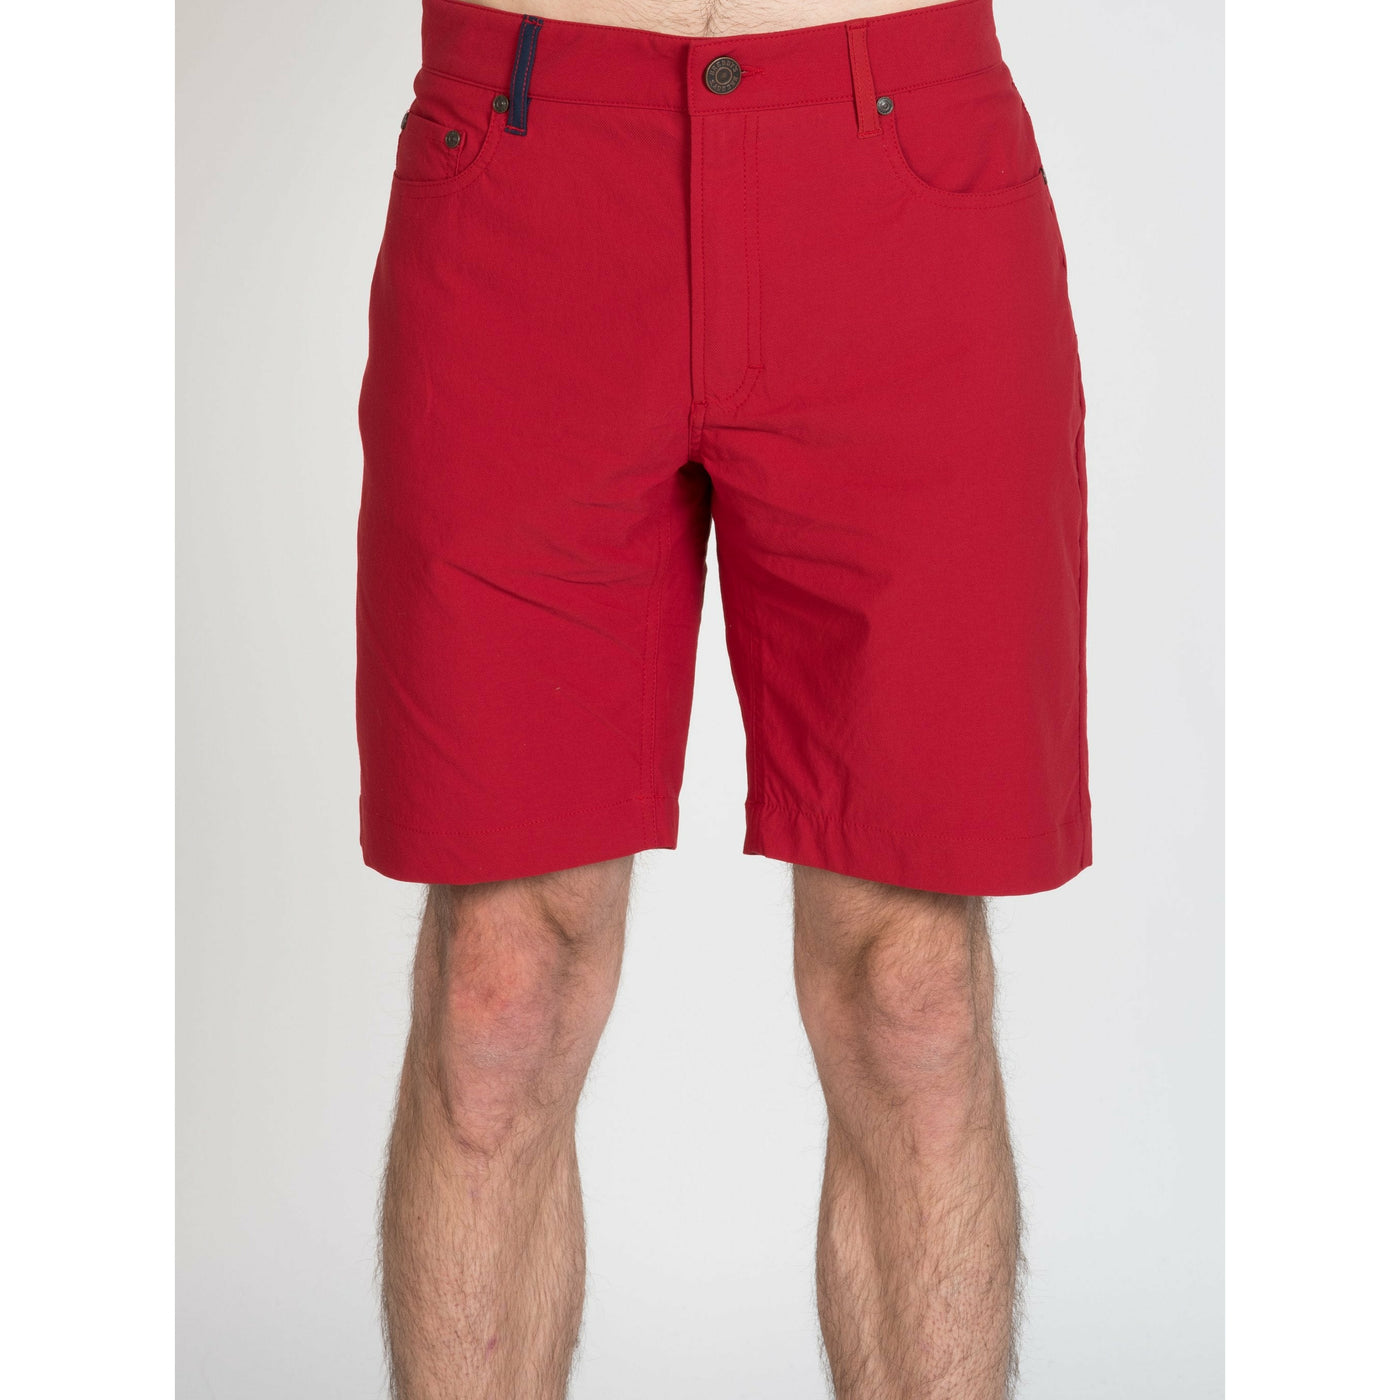 BREDDY'S - shorts New York Basic #farbe_red